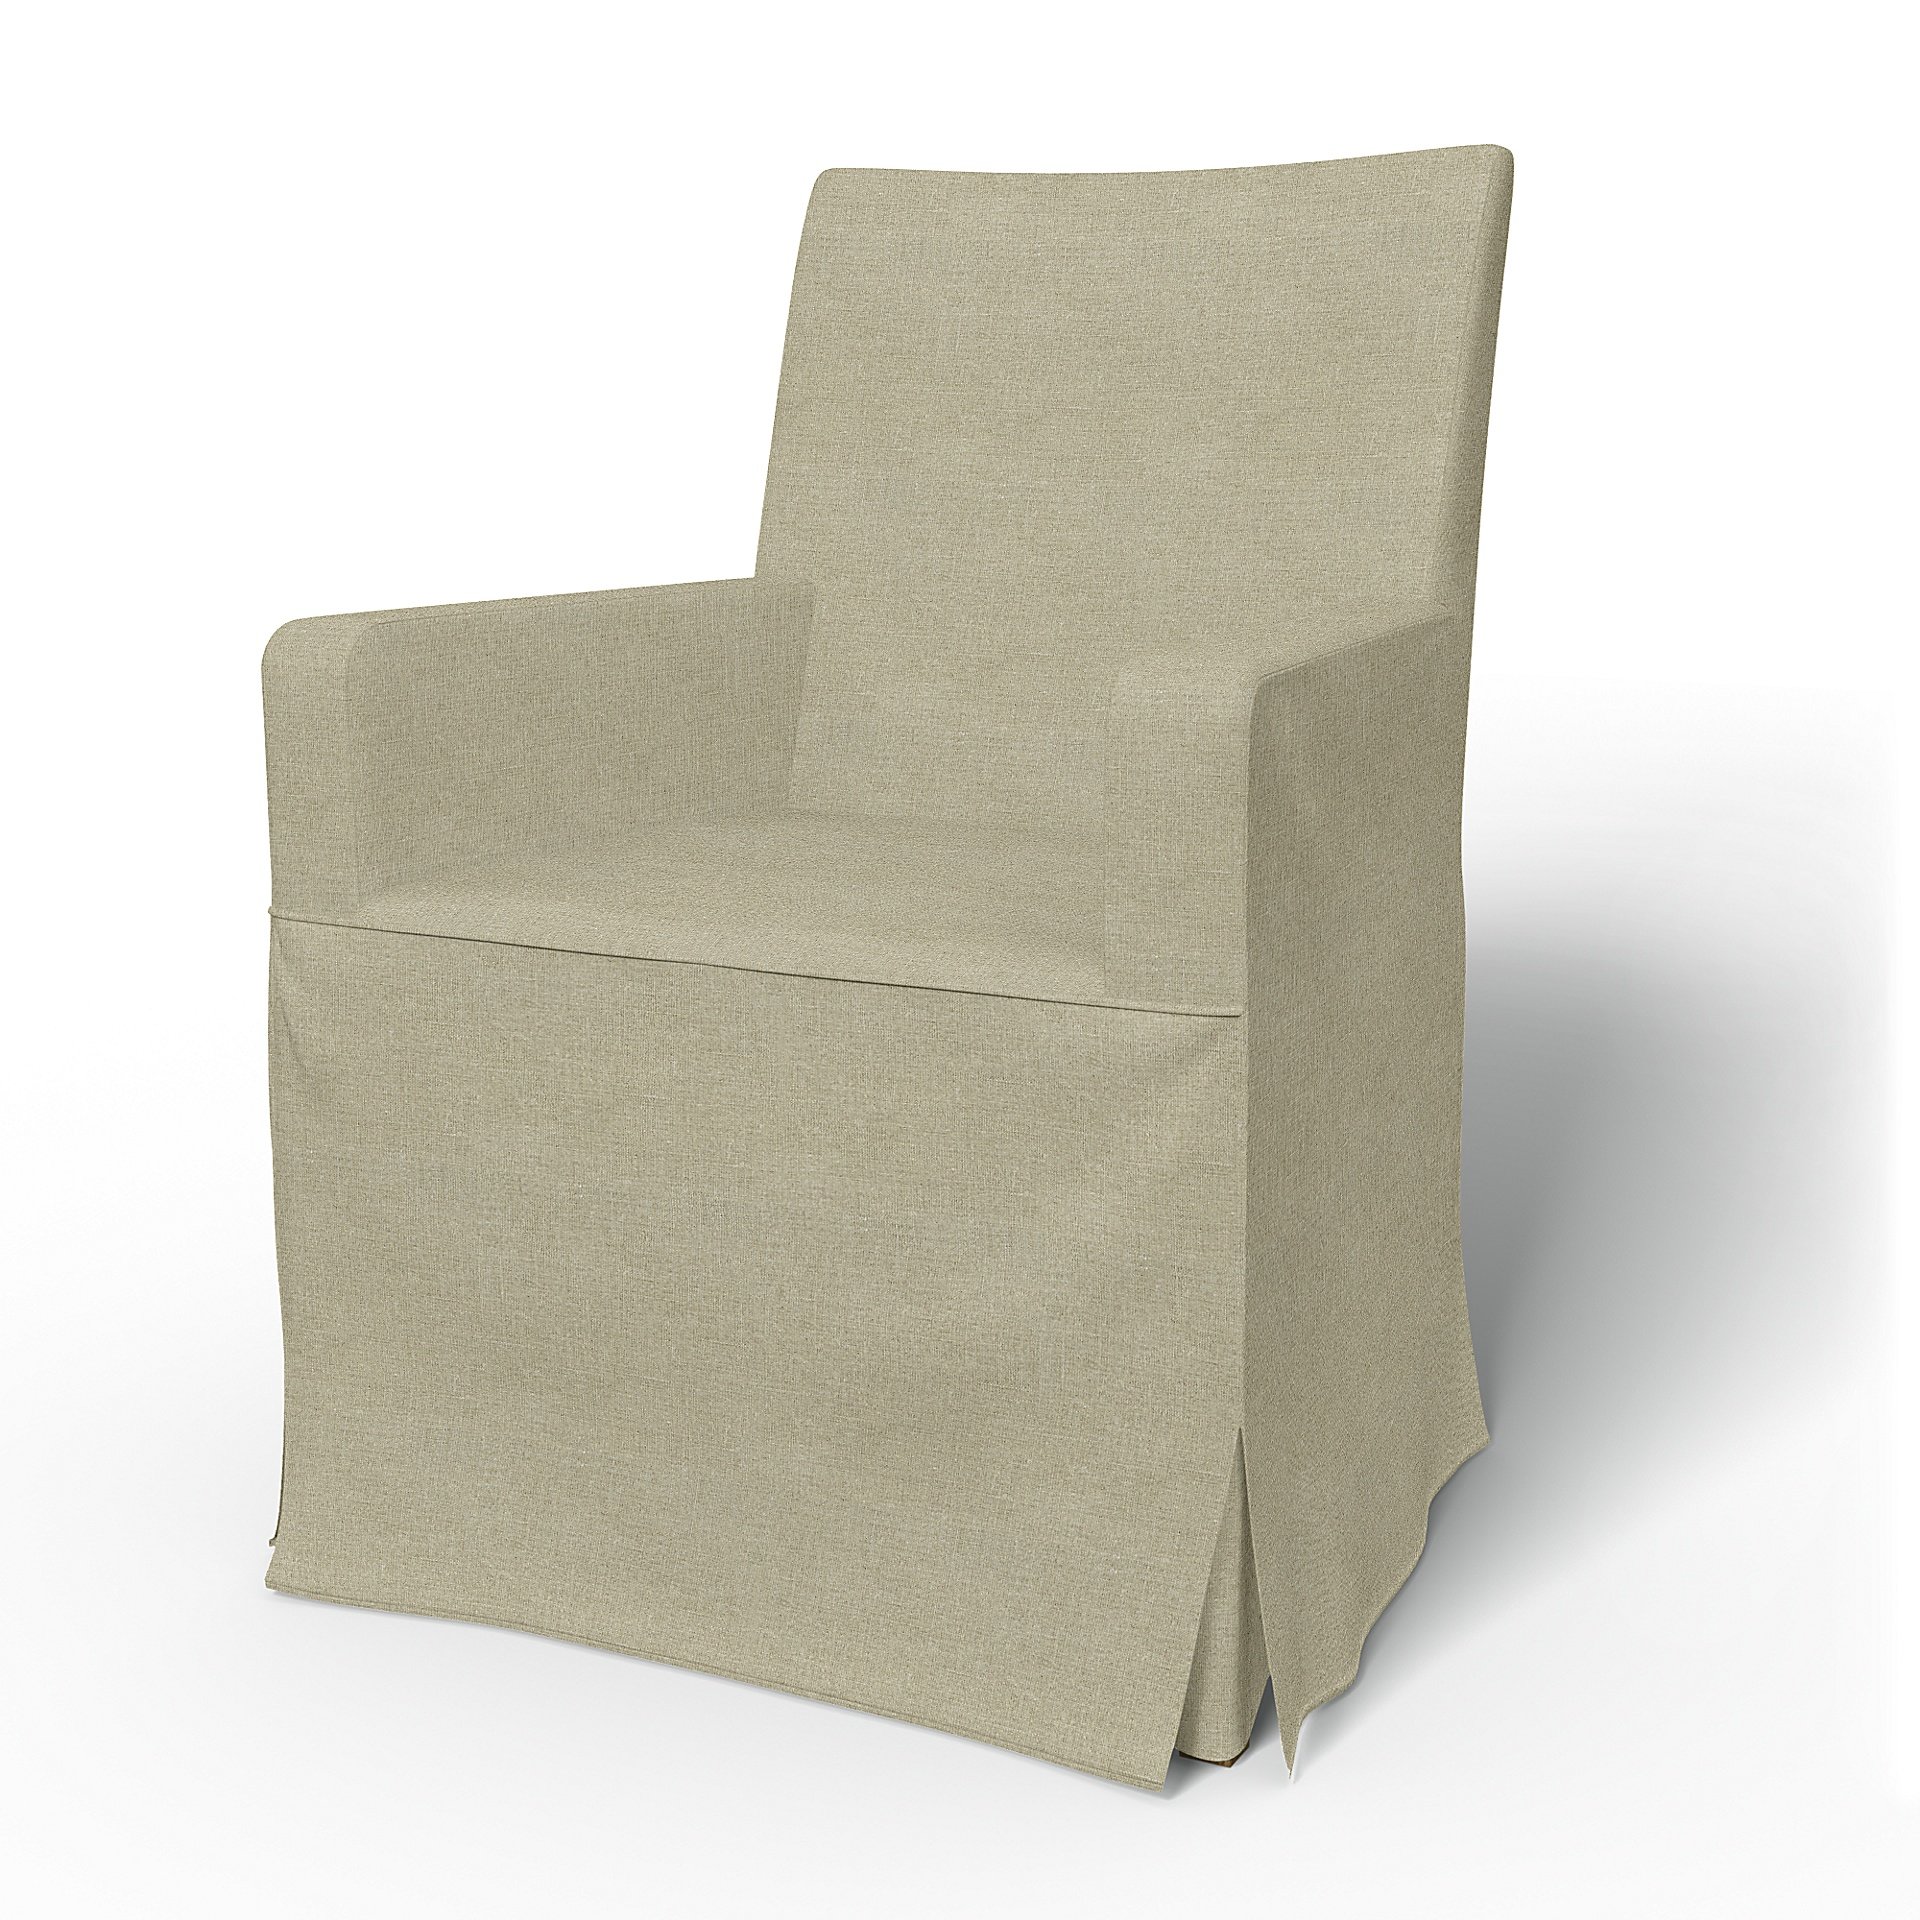 IKEA - Henriksdal, Chair cover w/ armrests, long skirt box pleat, Pebble, Linen - Bemz